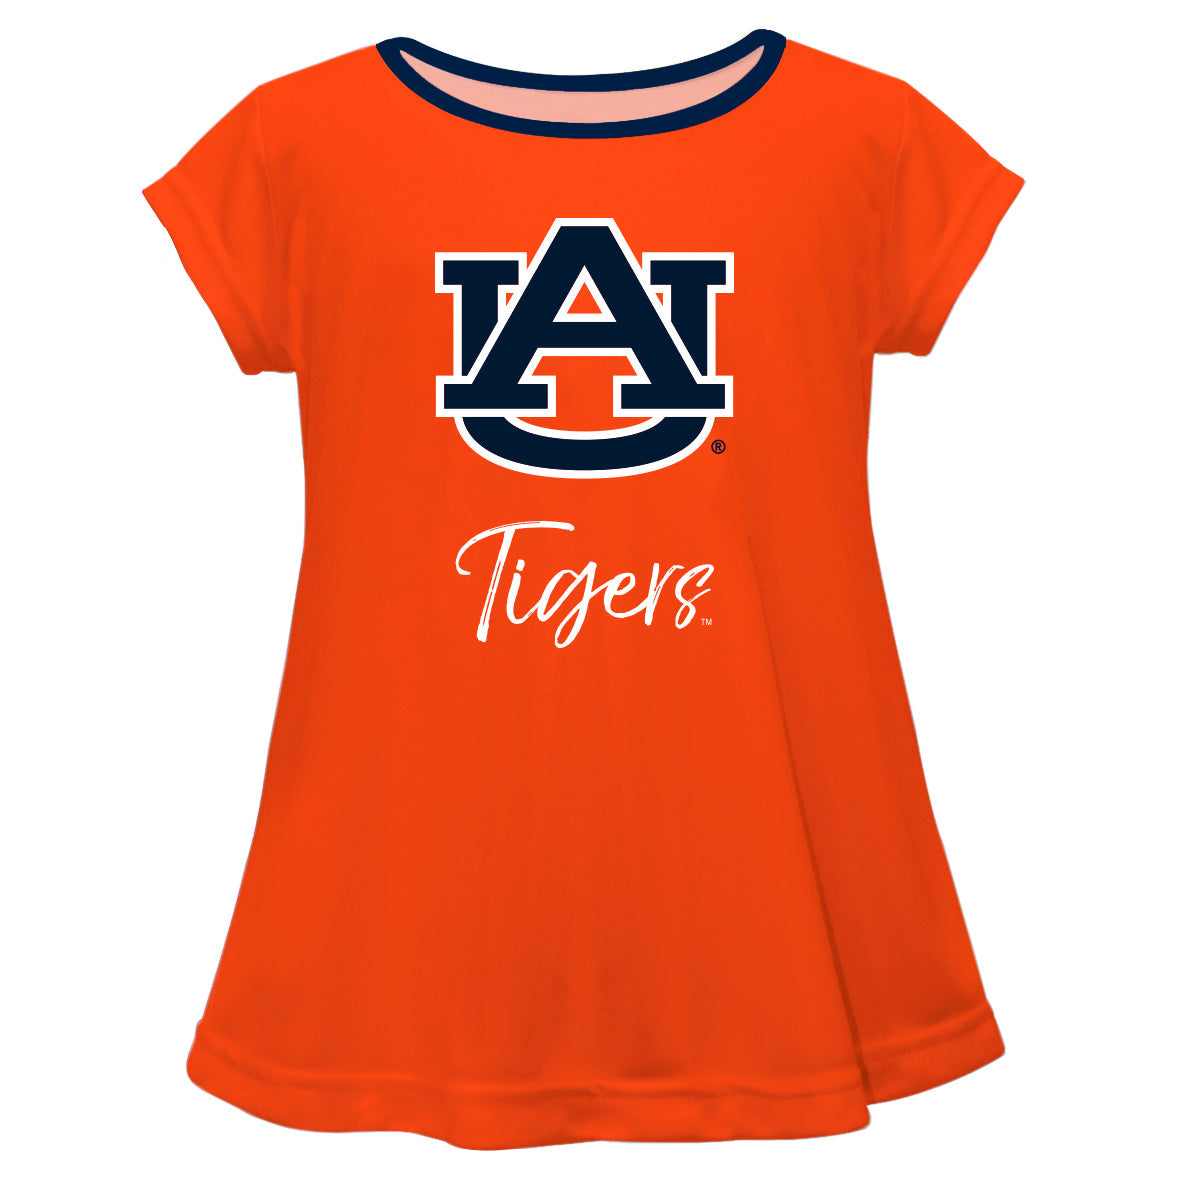 Auburn Tigers Girls Game Day Short Sleeve Orange Laurie Top by Vive La Fete